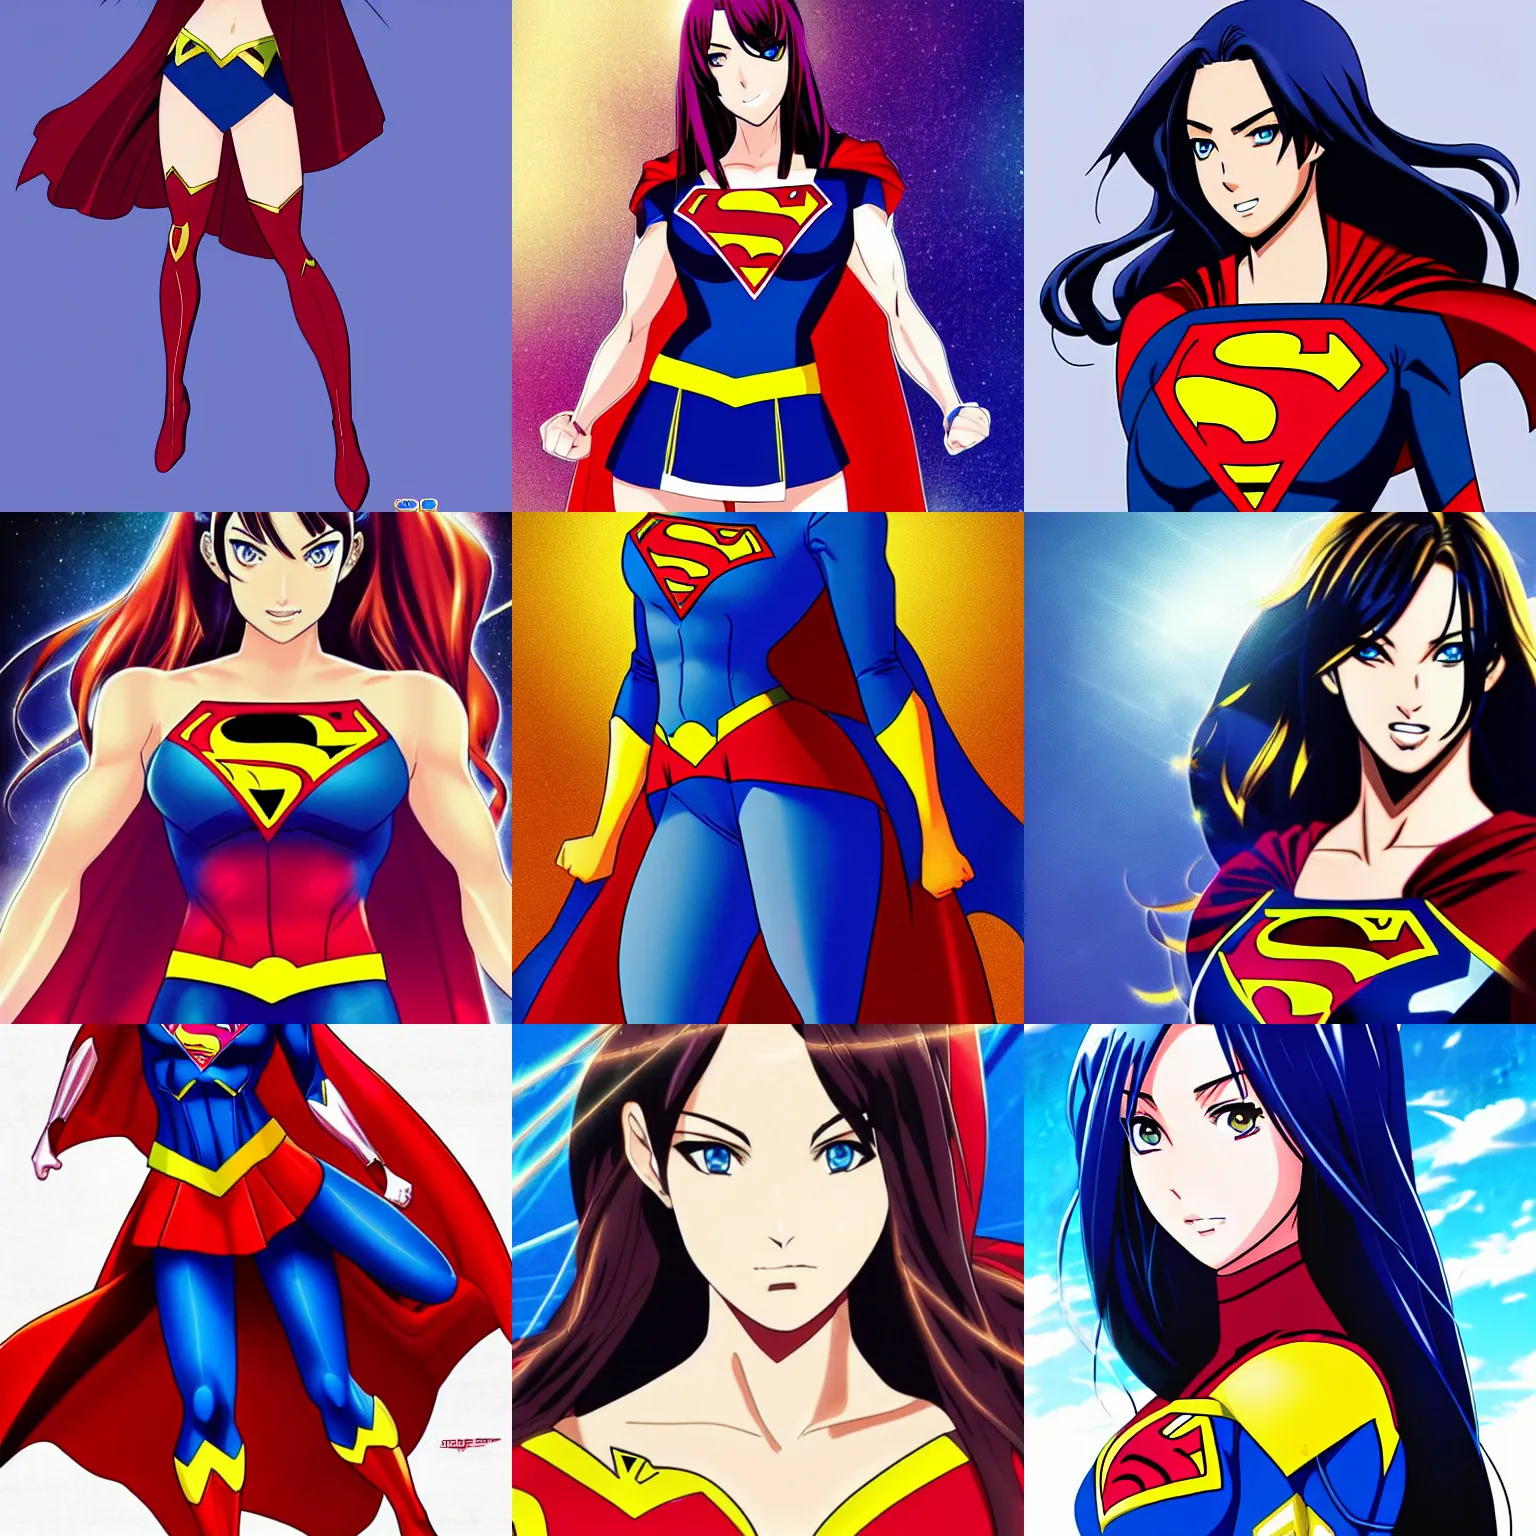 Prompt: Anime Key visual Megan Fox as supergirl, DC comics, Superhero, official media, artstation, elegant, intricate